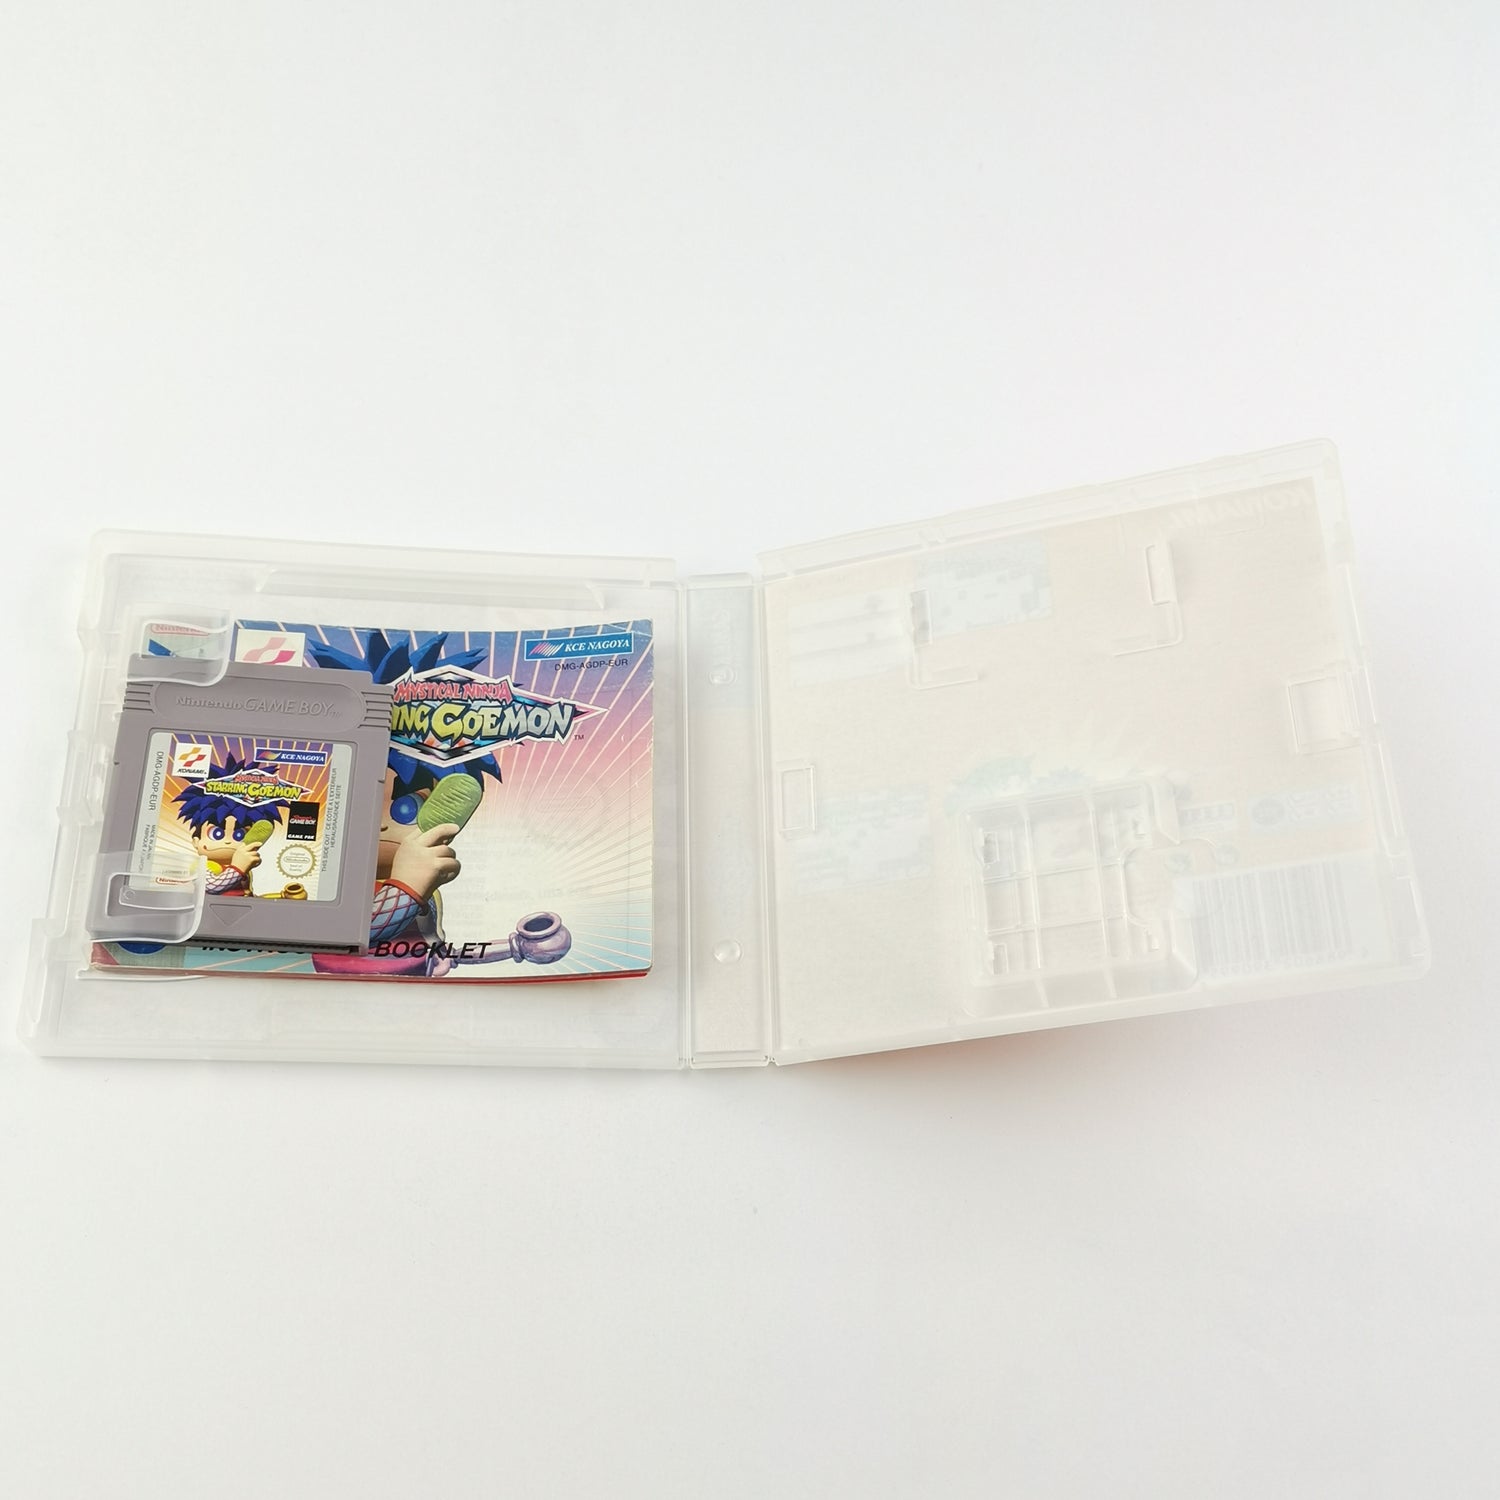 Nintendo Game Boy Classic Game: Mystical Ninja Starring Goemon - Module PAL EUR